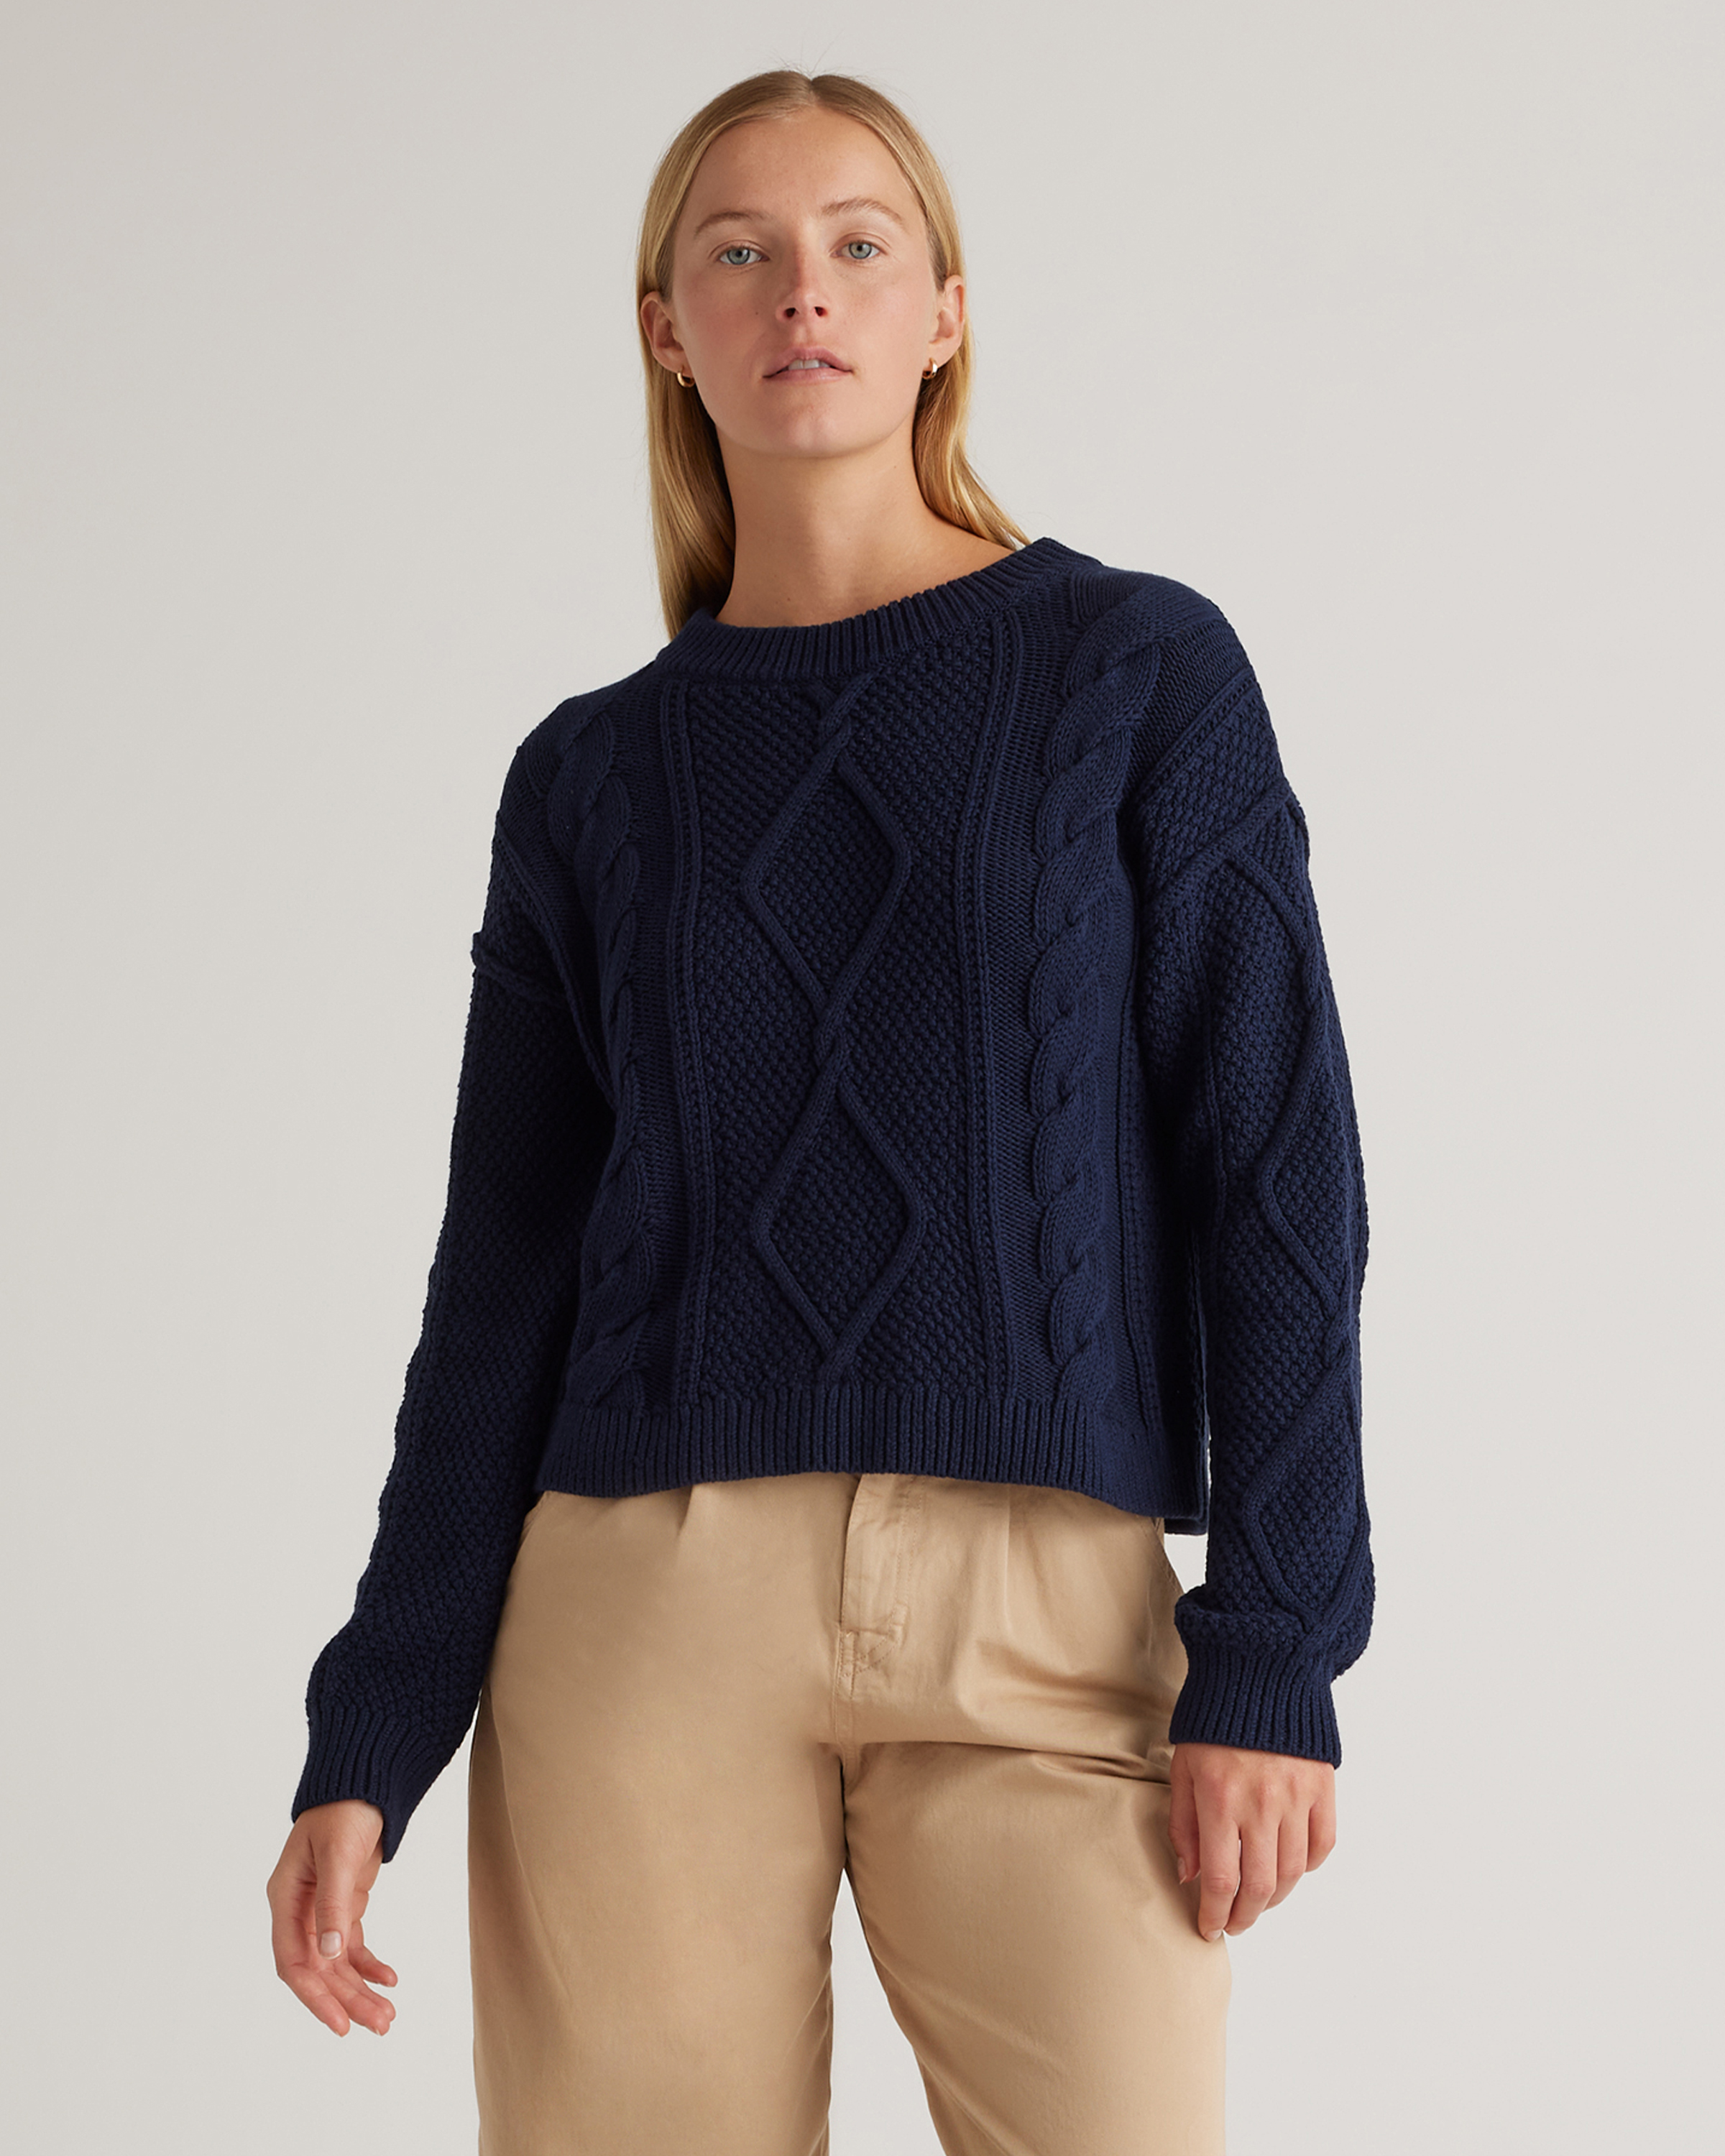 100% Organic Cotton - Sweater Infinity Scarf